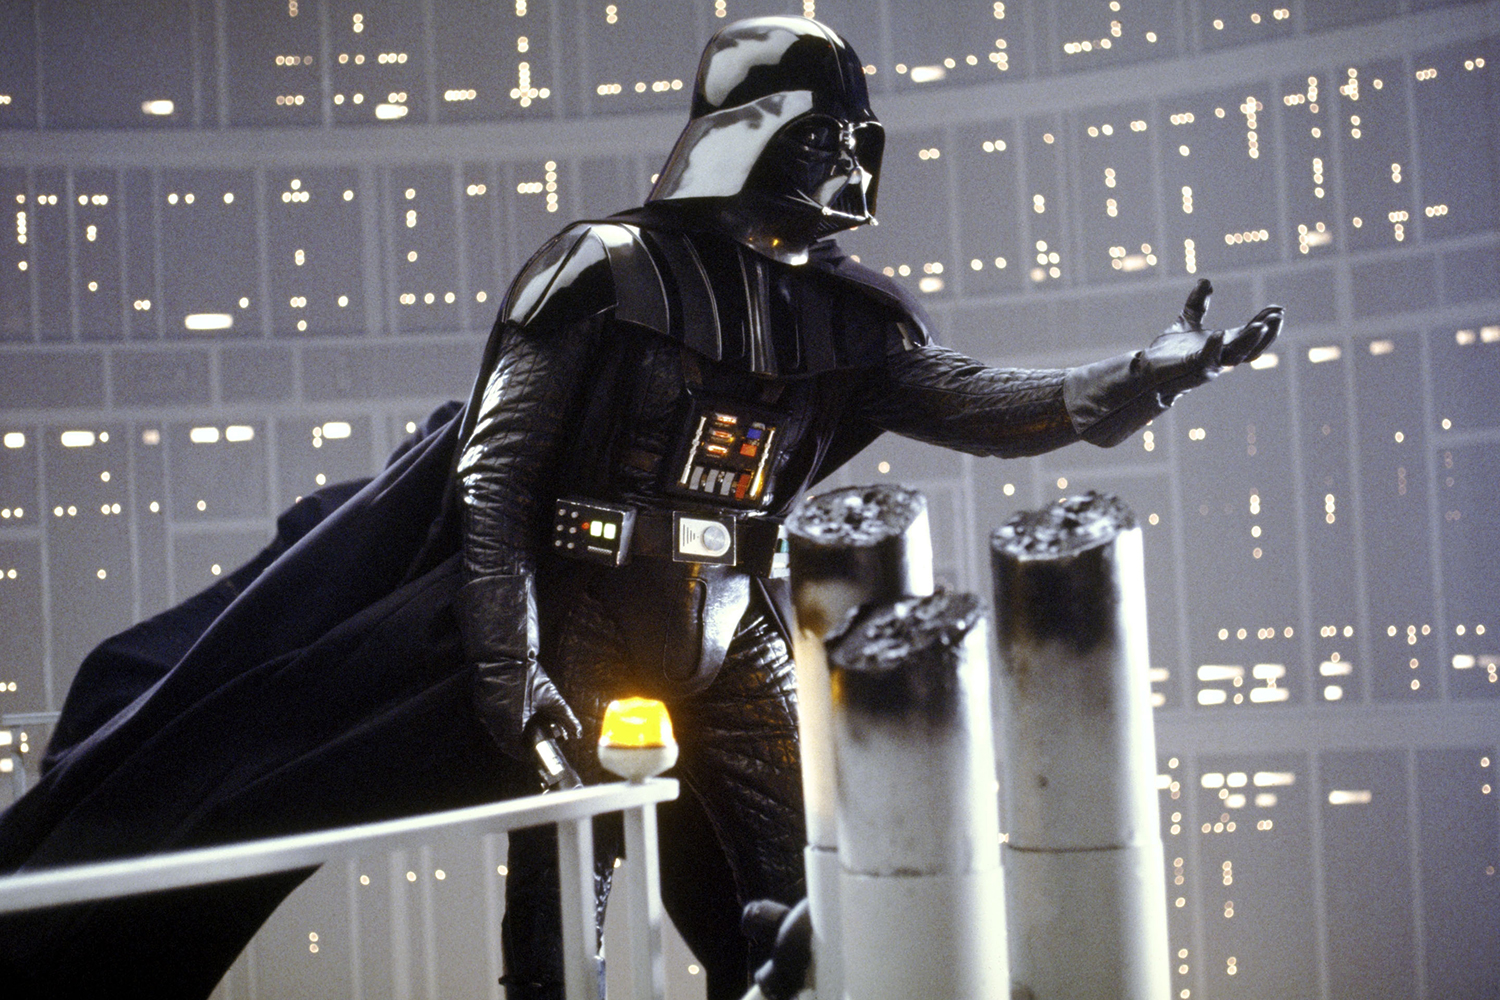 How to Watch 'Star Wars' in Order - Stream 'Star Wars' Films in Order